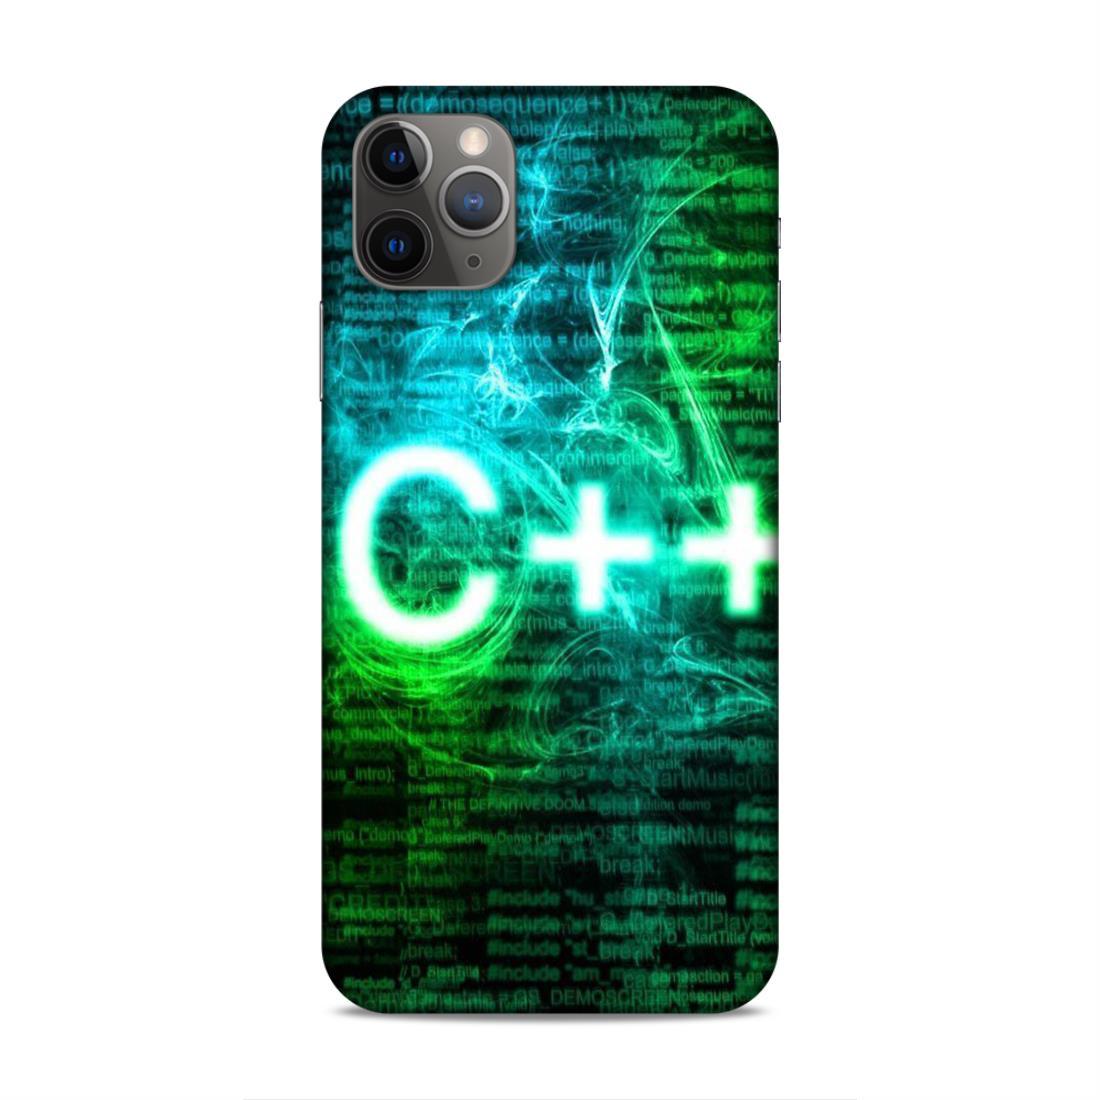 C++ Language iPhone 11 Pro Max Phone Back Case